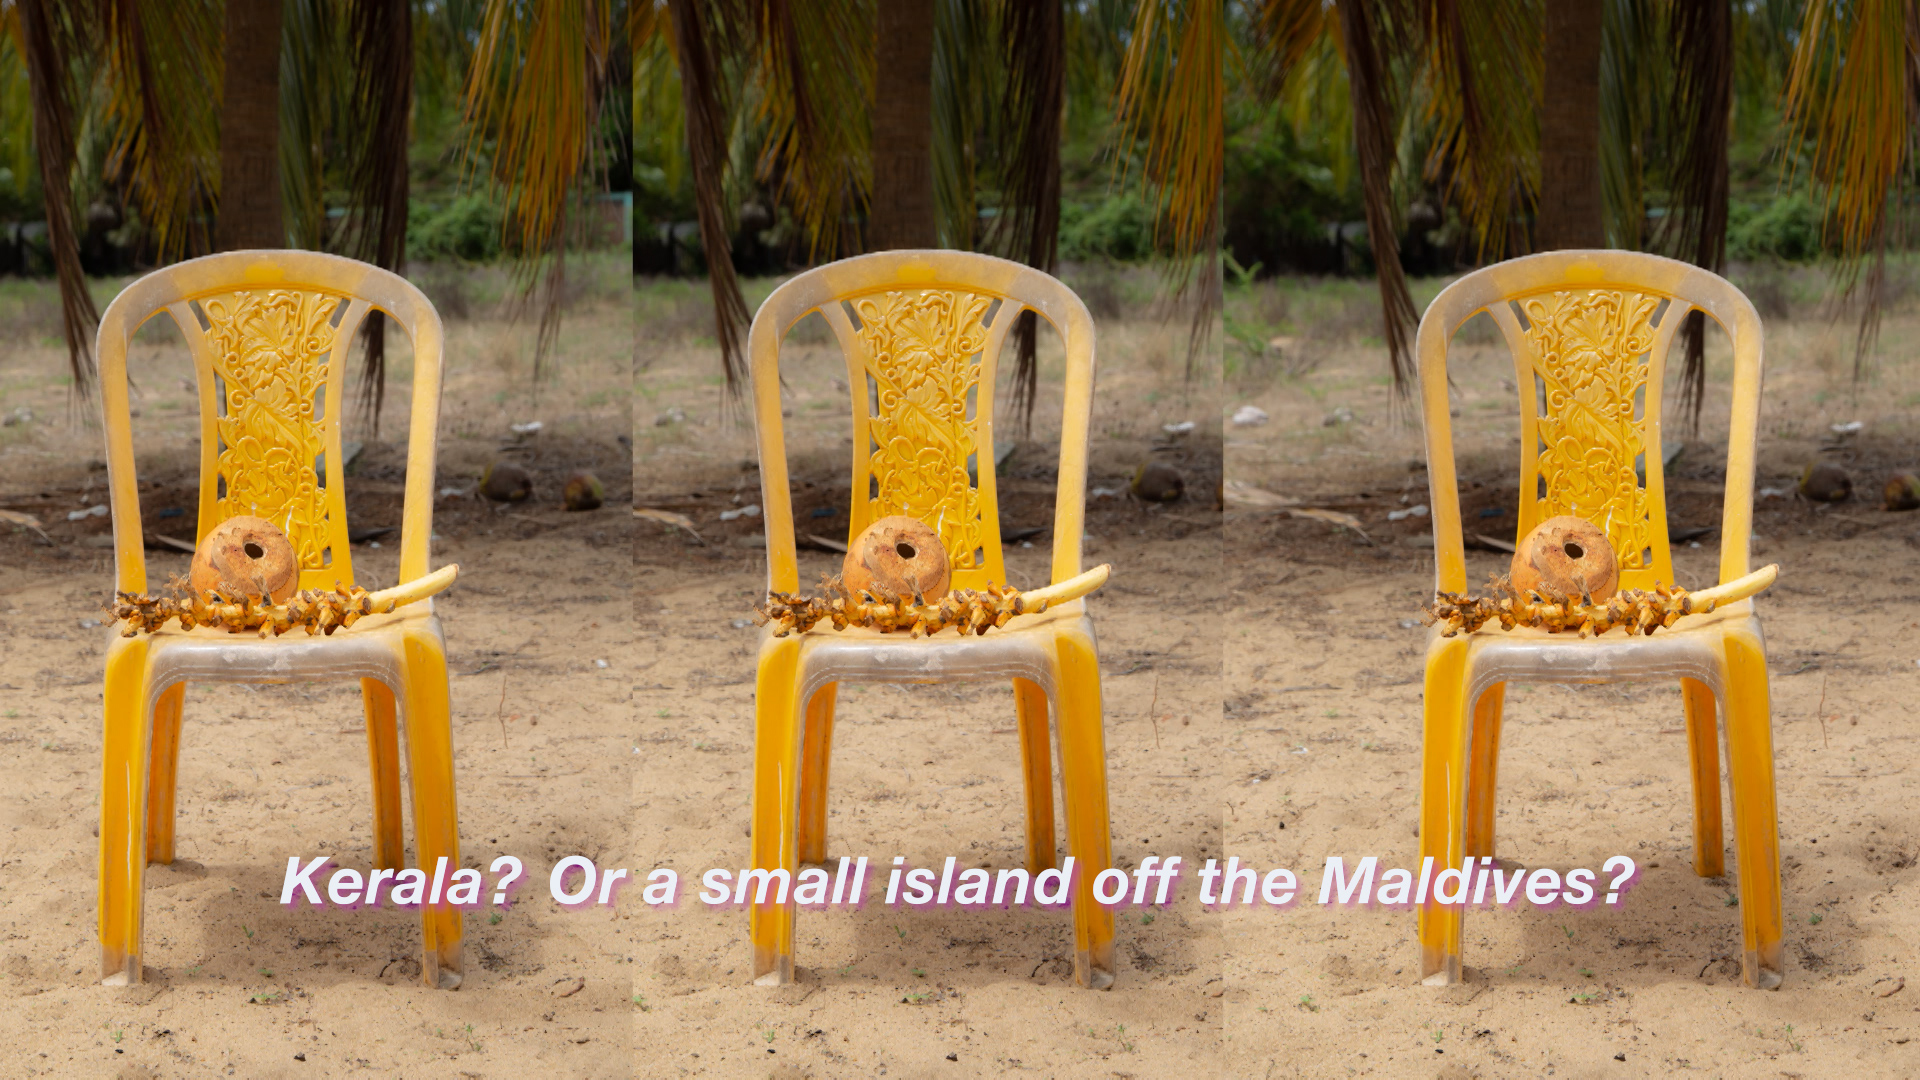 kerala-batticaloa-yellow-chairs-coco-l-dayhew